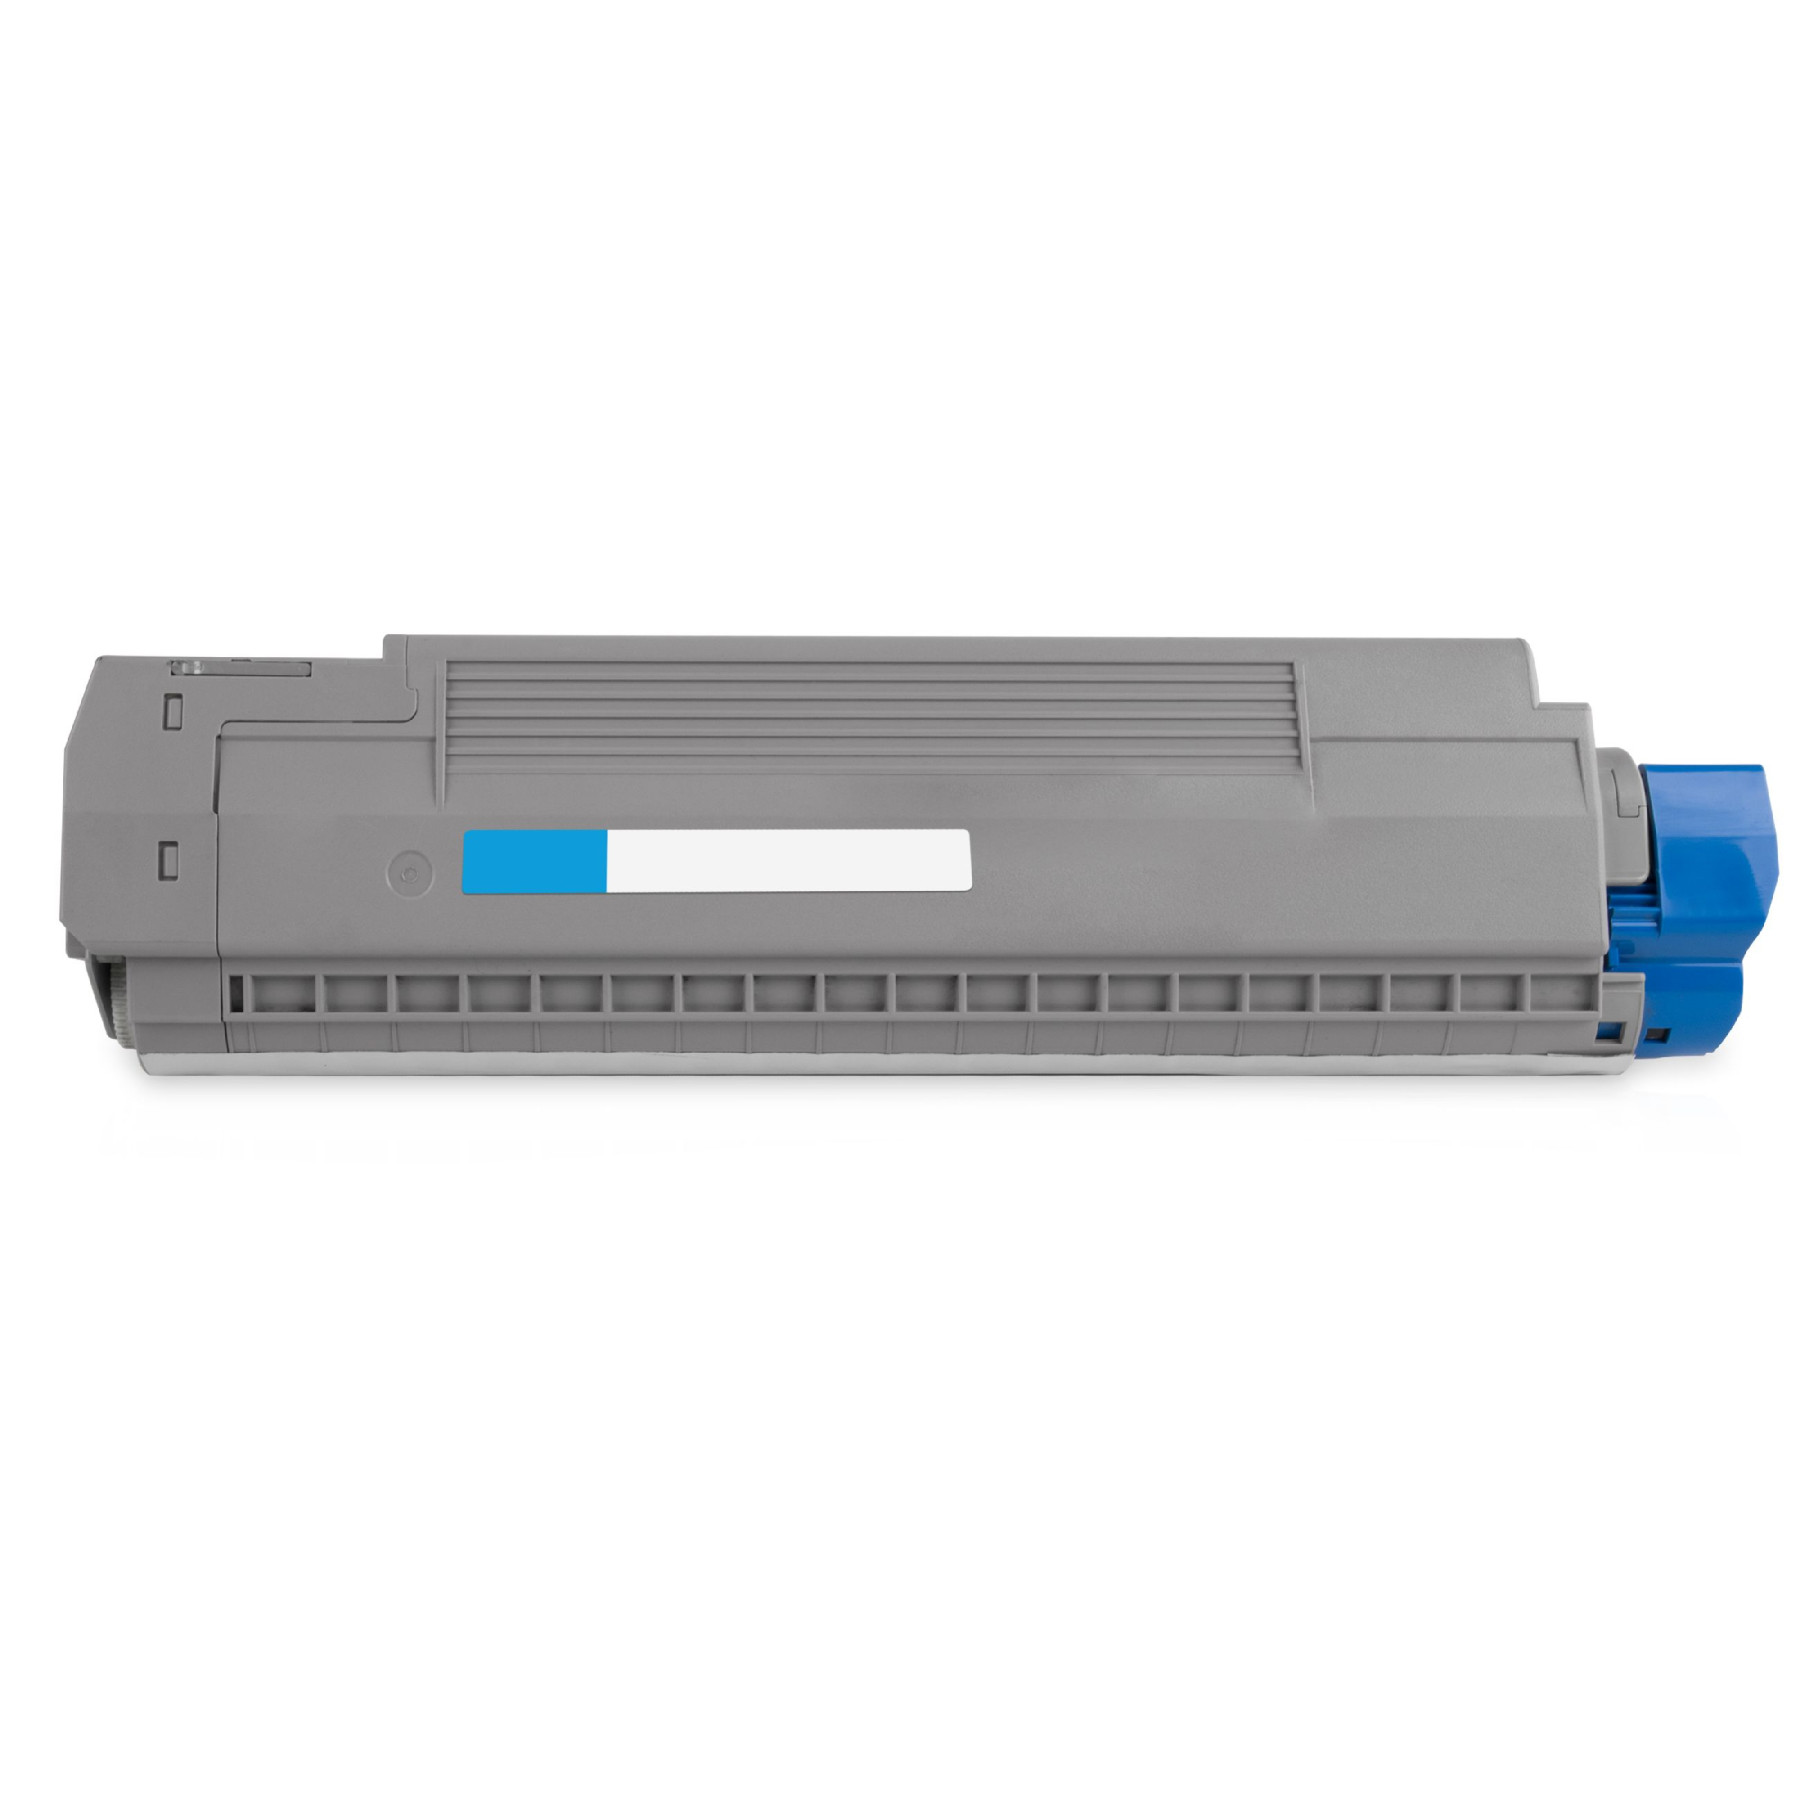 Set consisting of Toner cartridge (alternative) compatible with OKI 44059260 black, 44059259 cyan, 44059258 magenta, 44059257 yellow - Save 6%